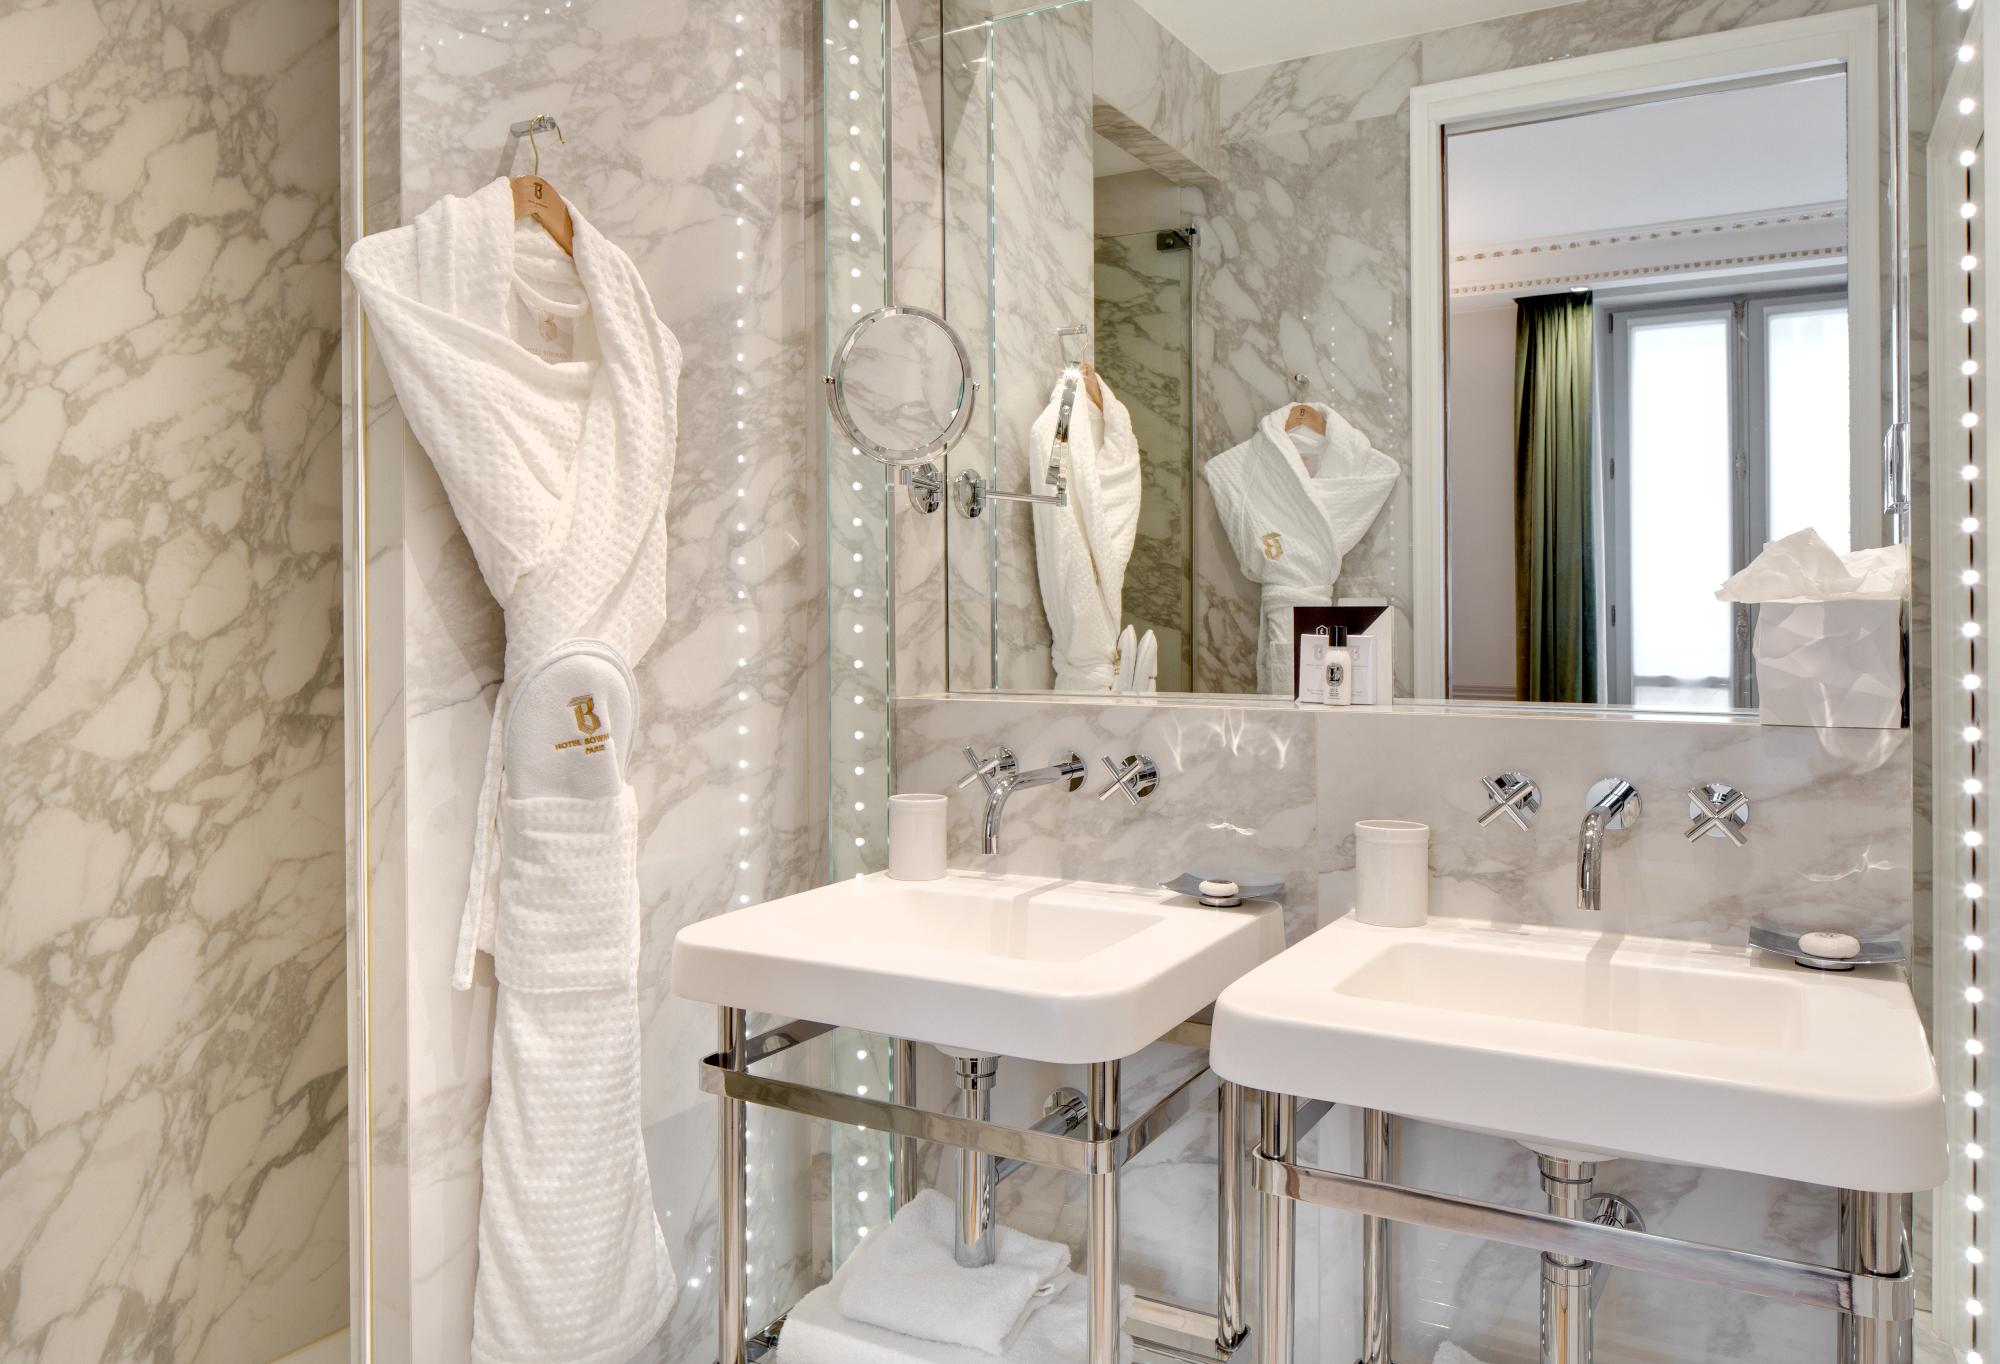 Hôtel Bowmann | Bathroom of the Deluxe room